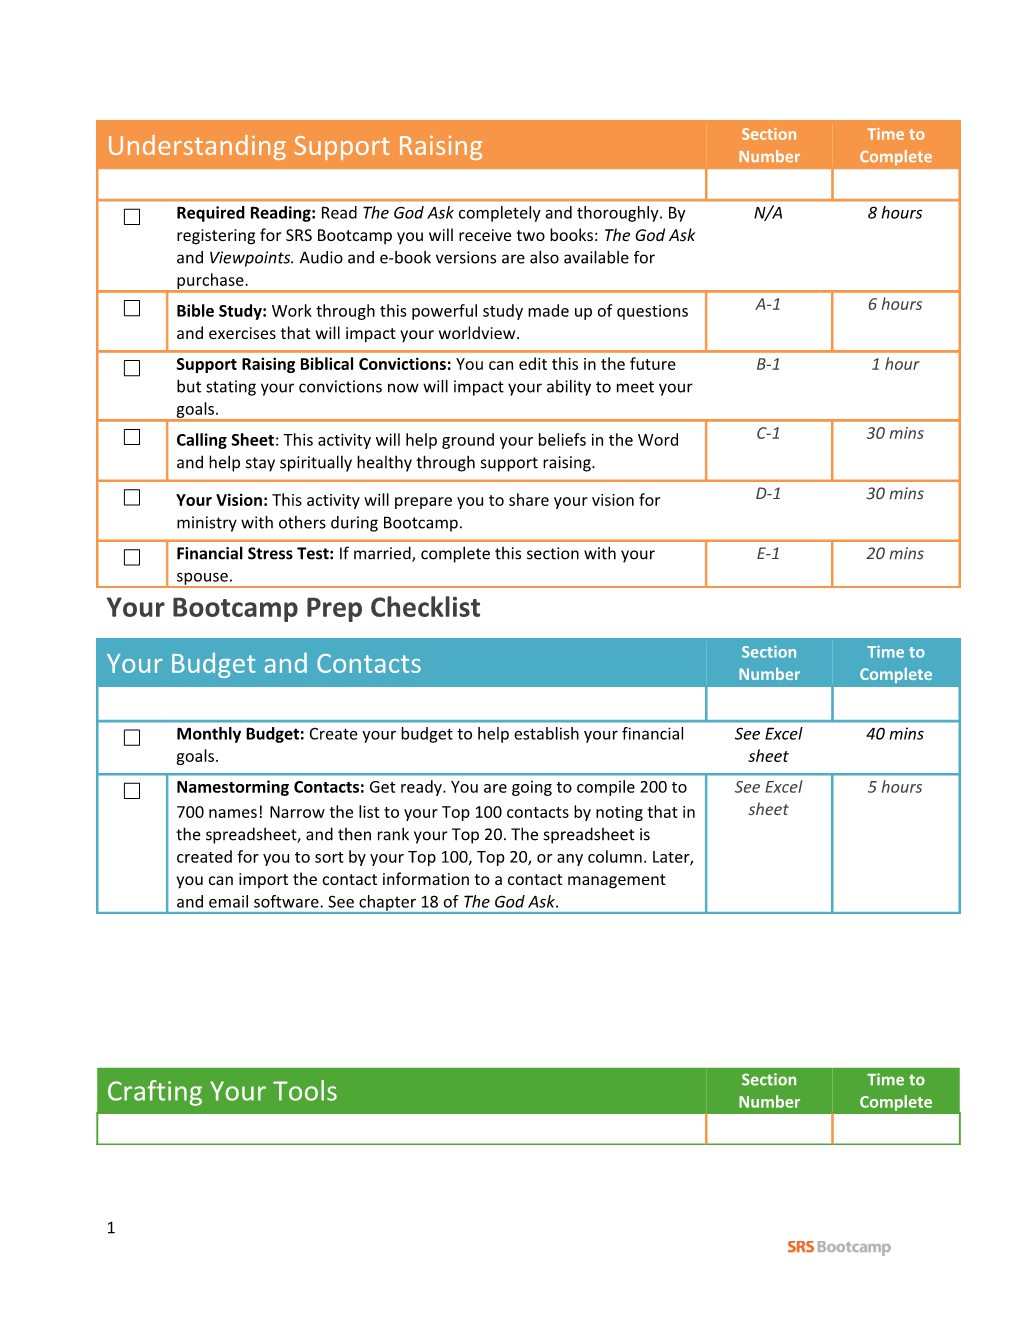 Your Bootcamp Prep Checklist